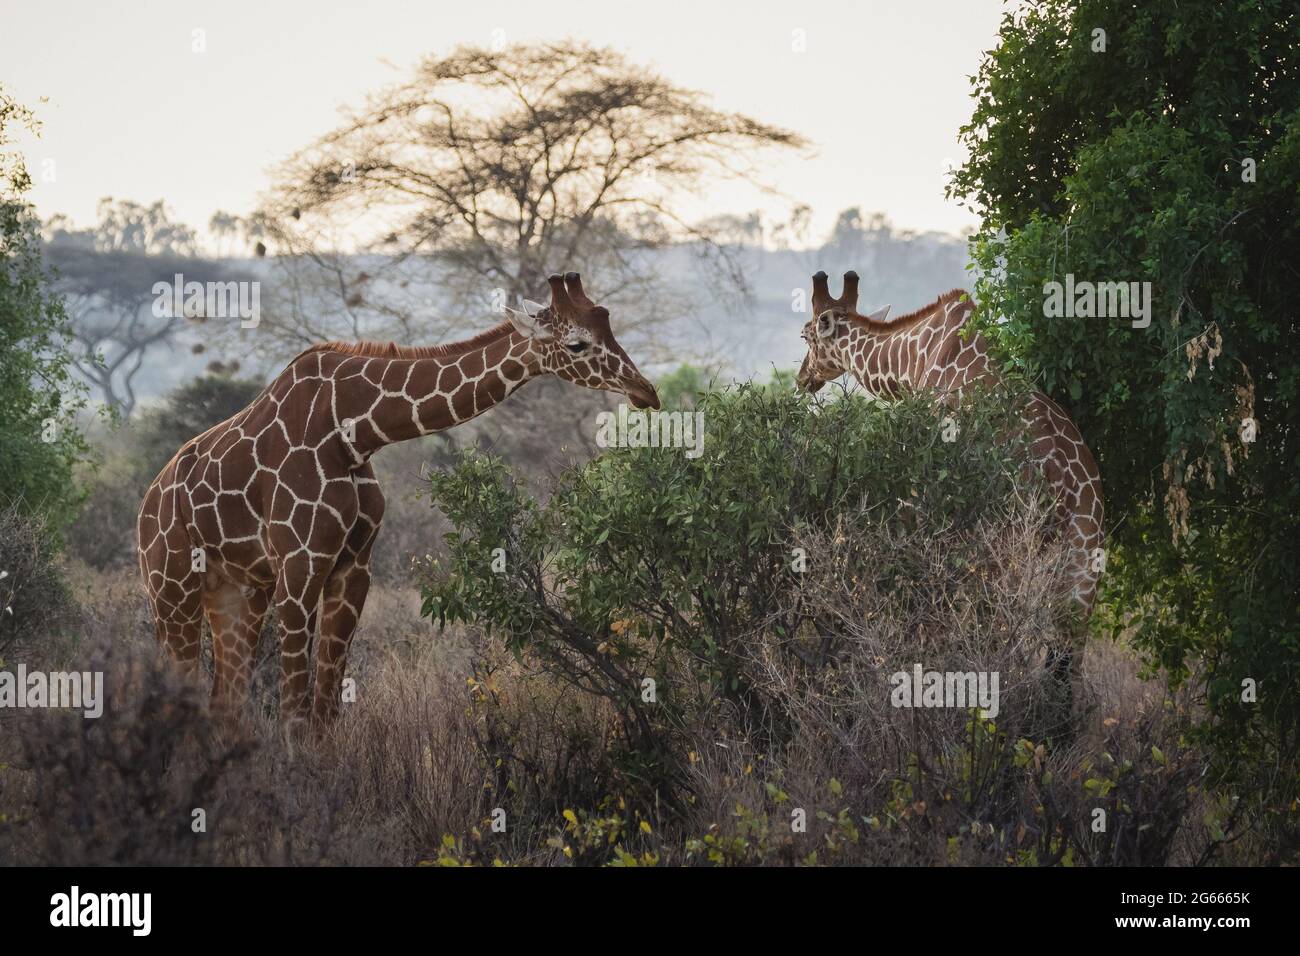 Tiere in freier Wildbahn - Retikulierte Giraffe - Samburu National Reserve, Nord-Kenia Stockfoto